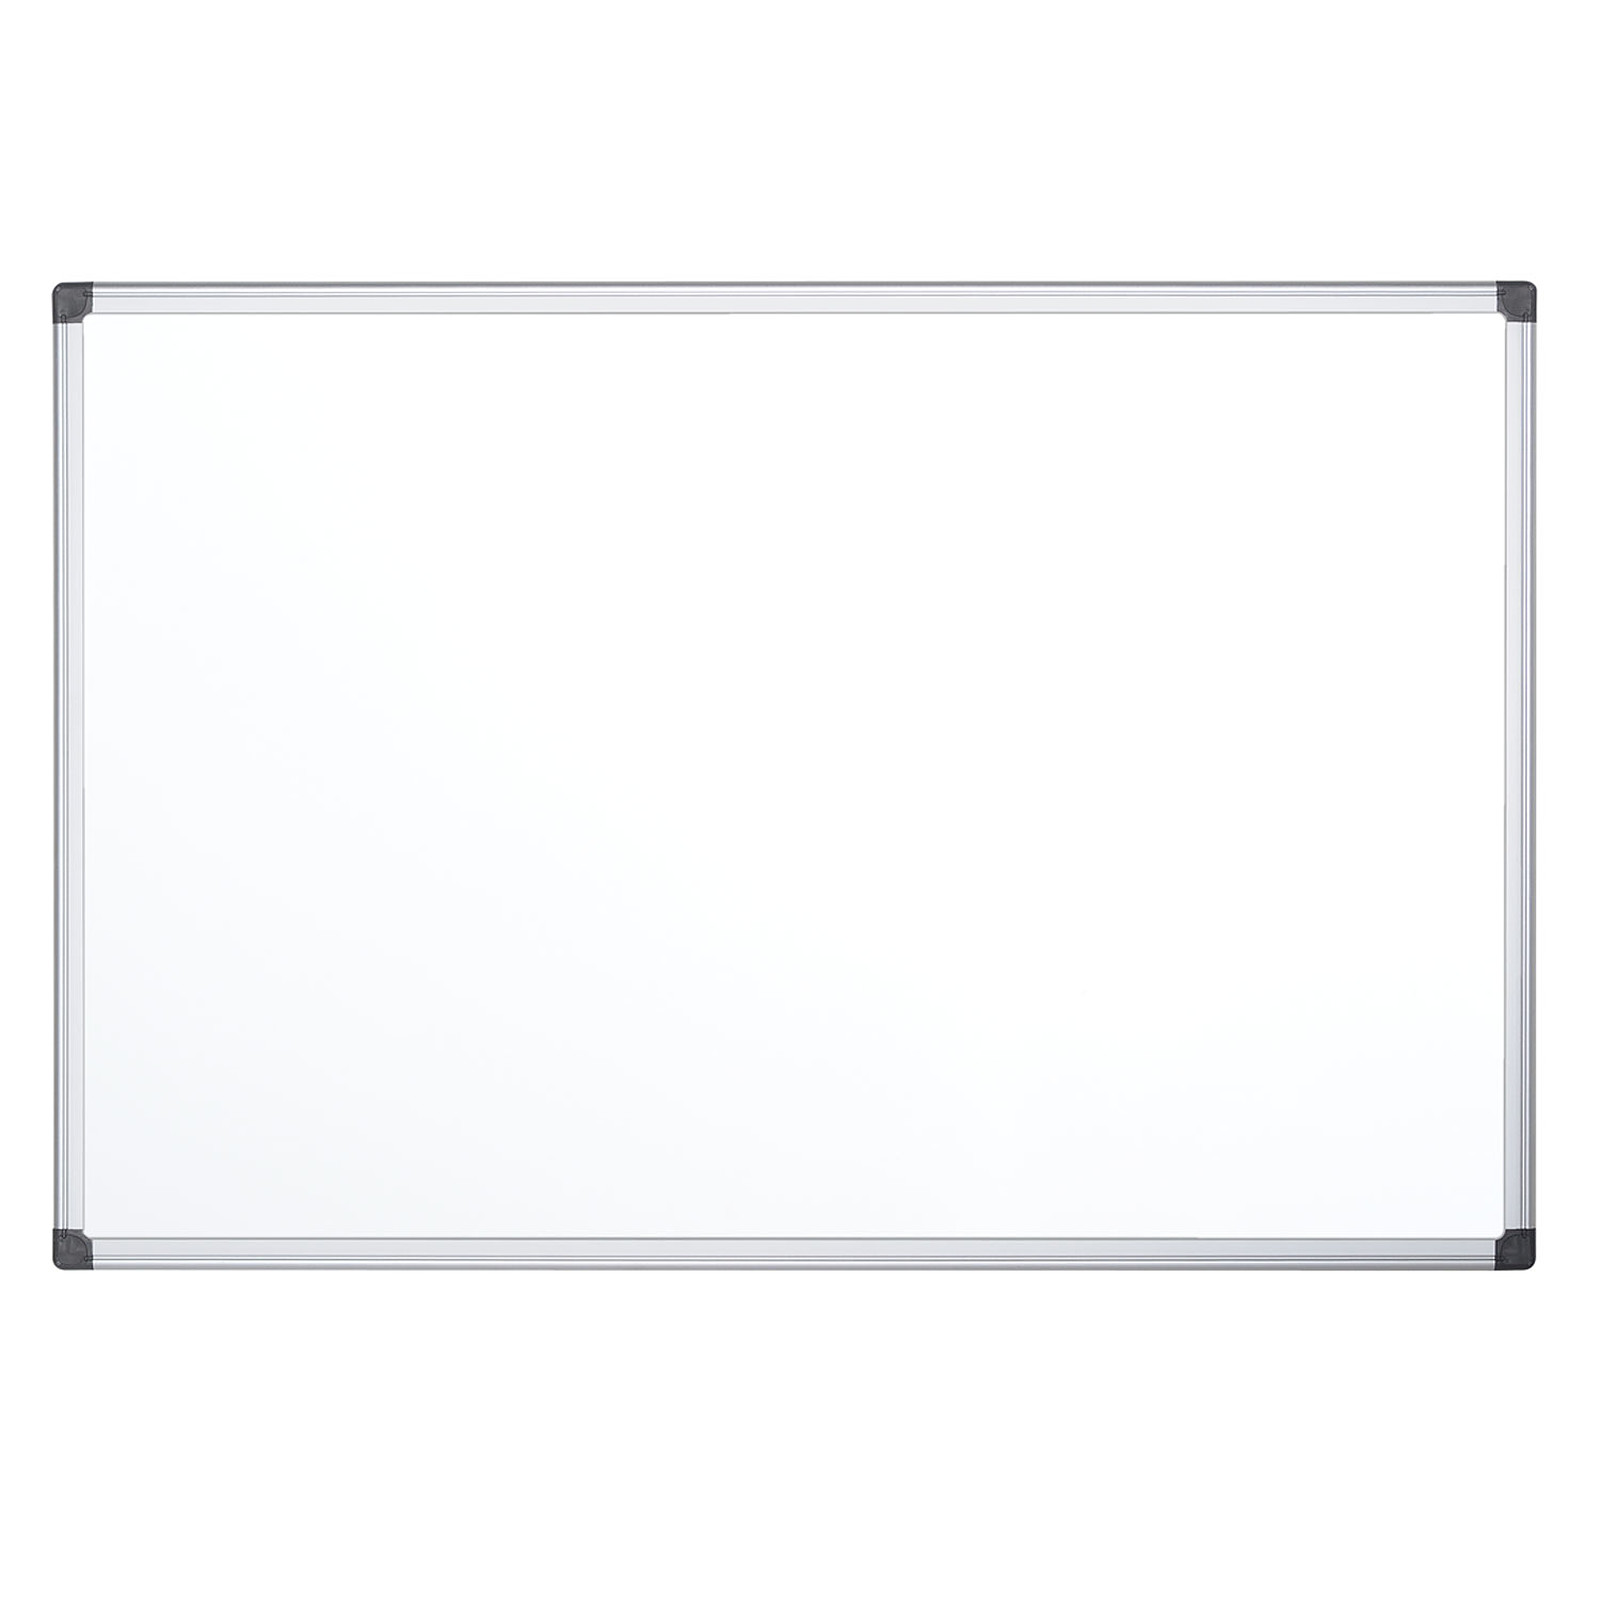 Bi-Office Tableau blanc emaille 150 x 100 cm - Tableau blanc et paperboard Bi-Office